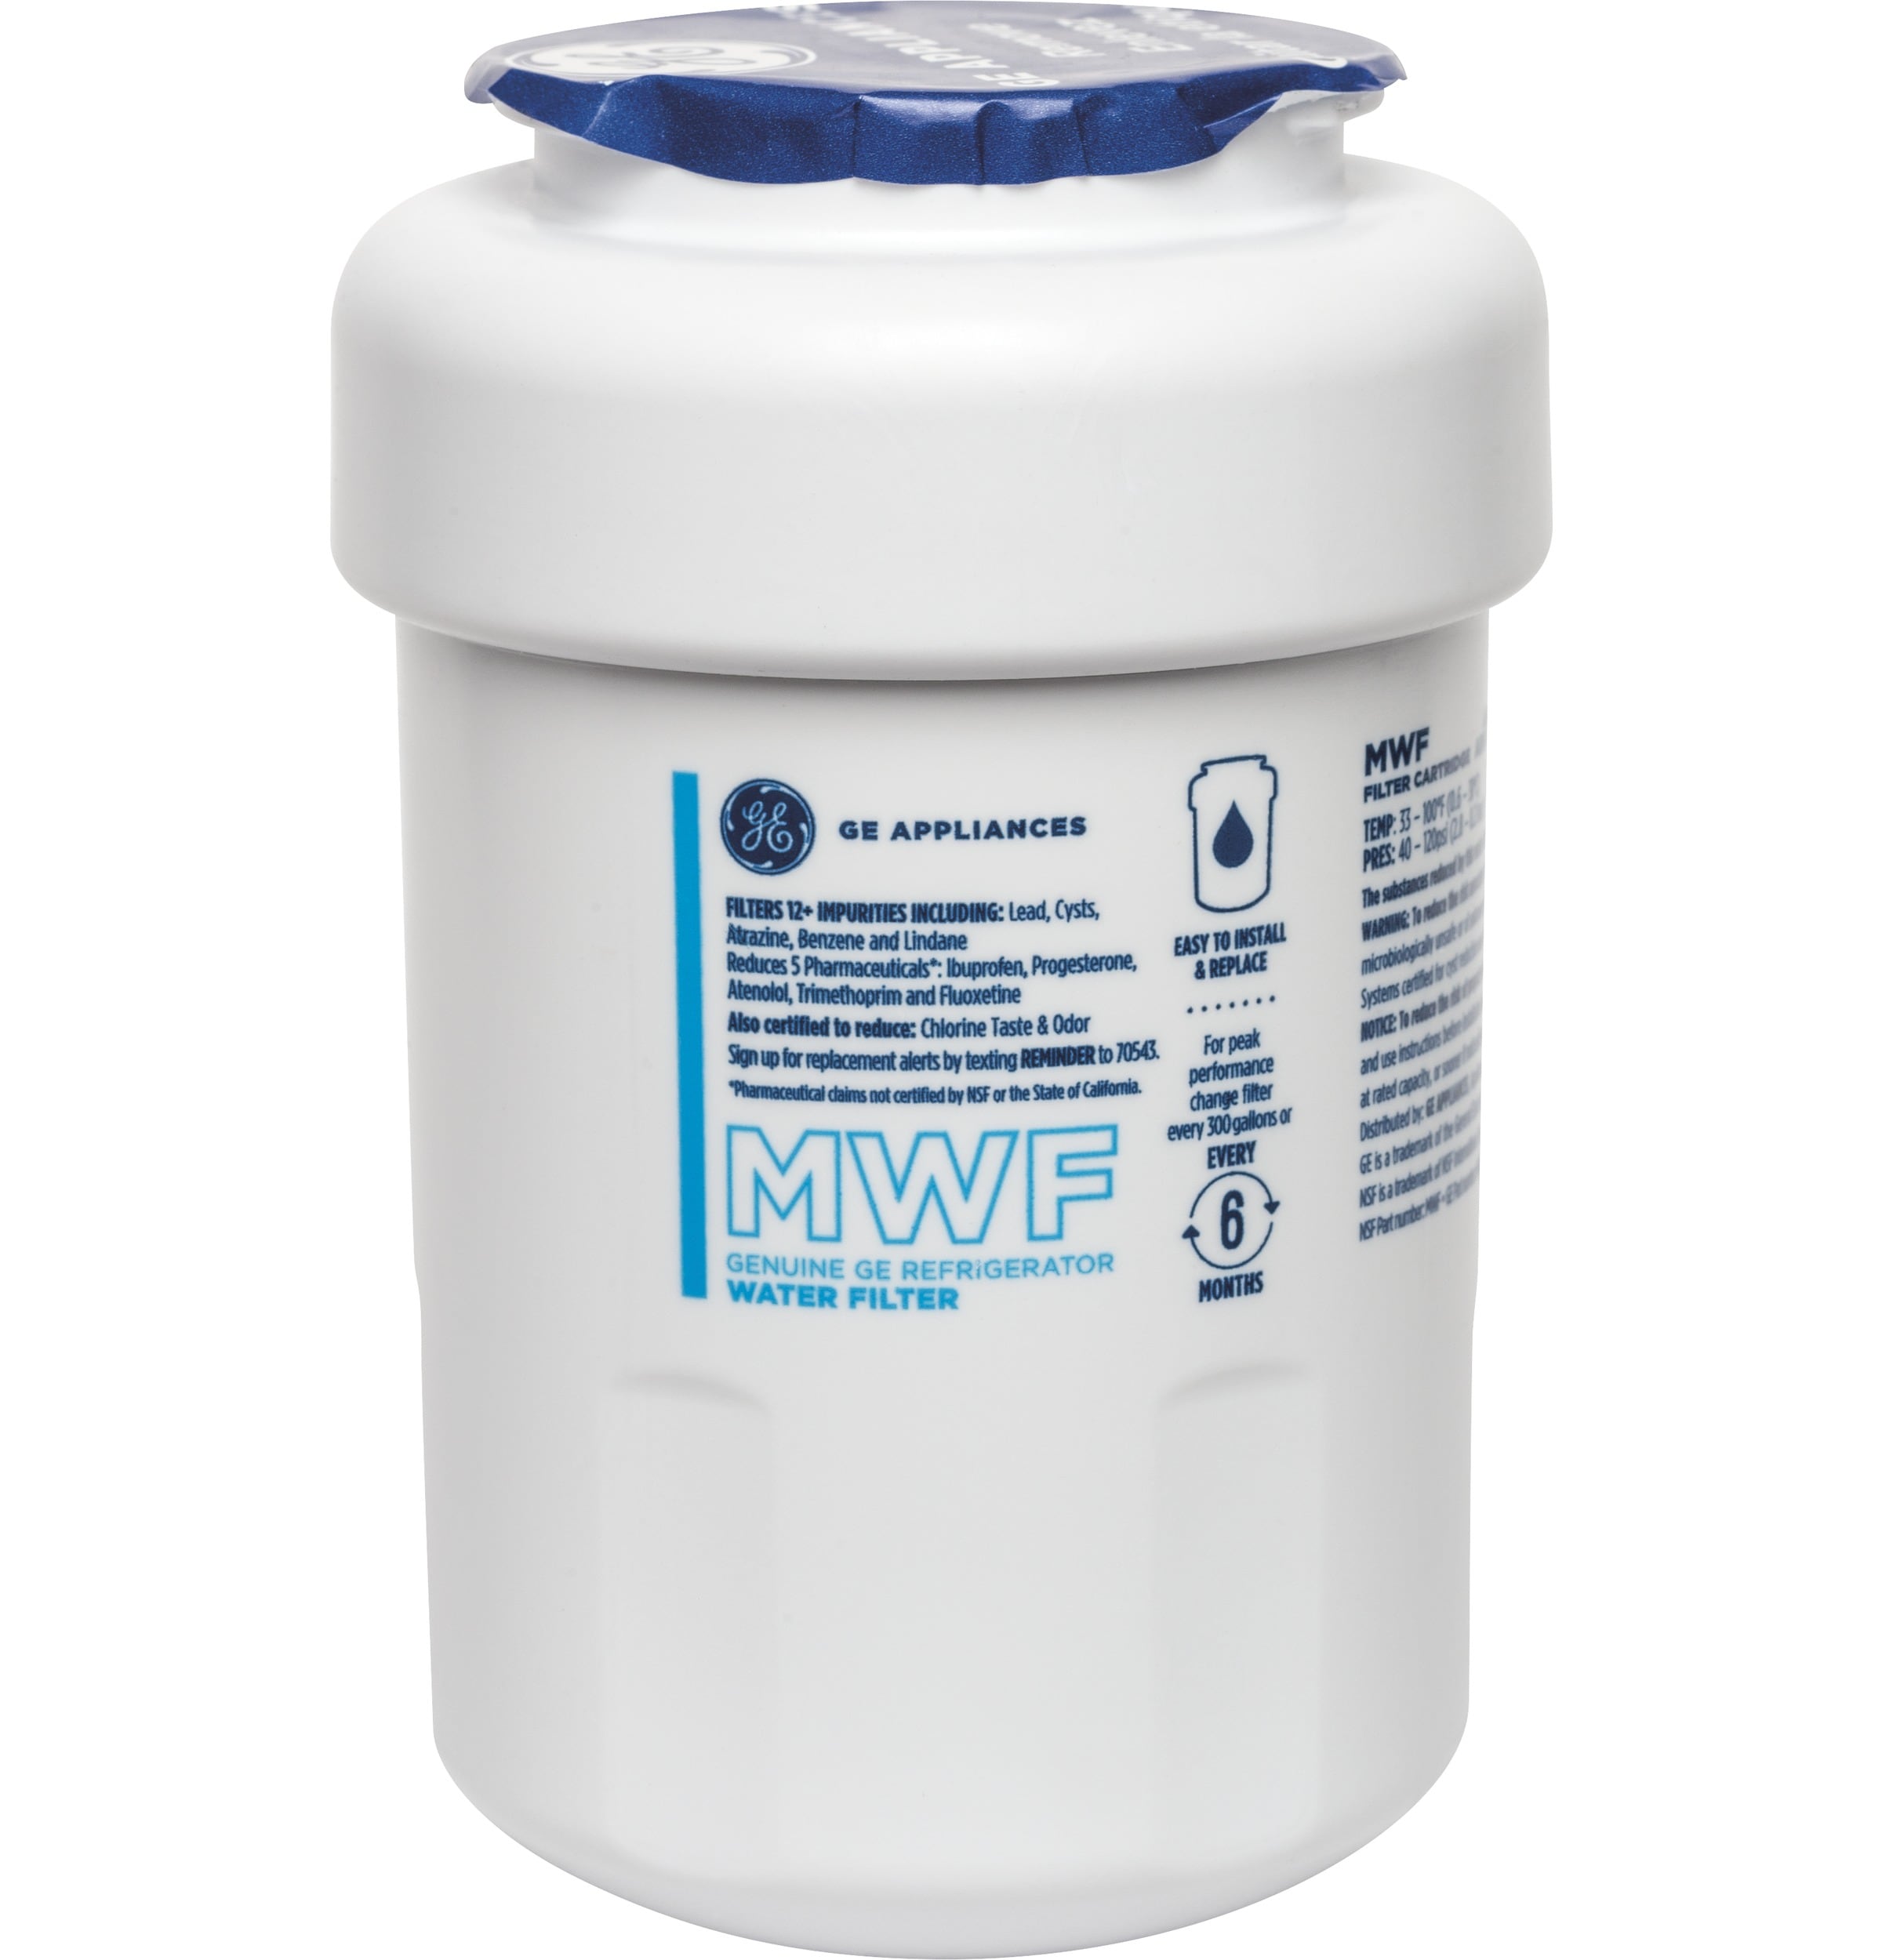 BRITA MWF Refrigerator Water Filter Replacement for GE SmartWater MWFP